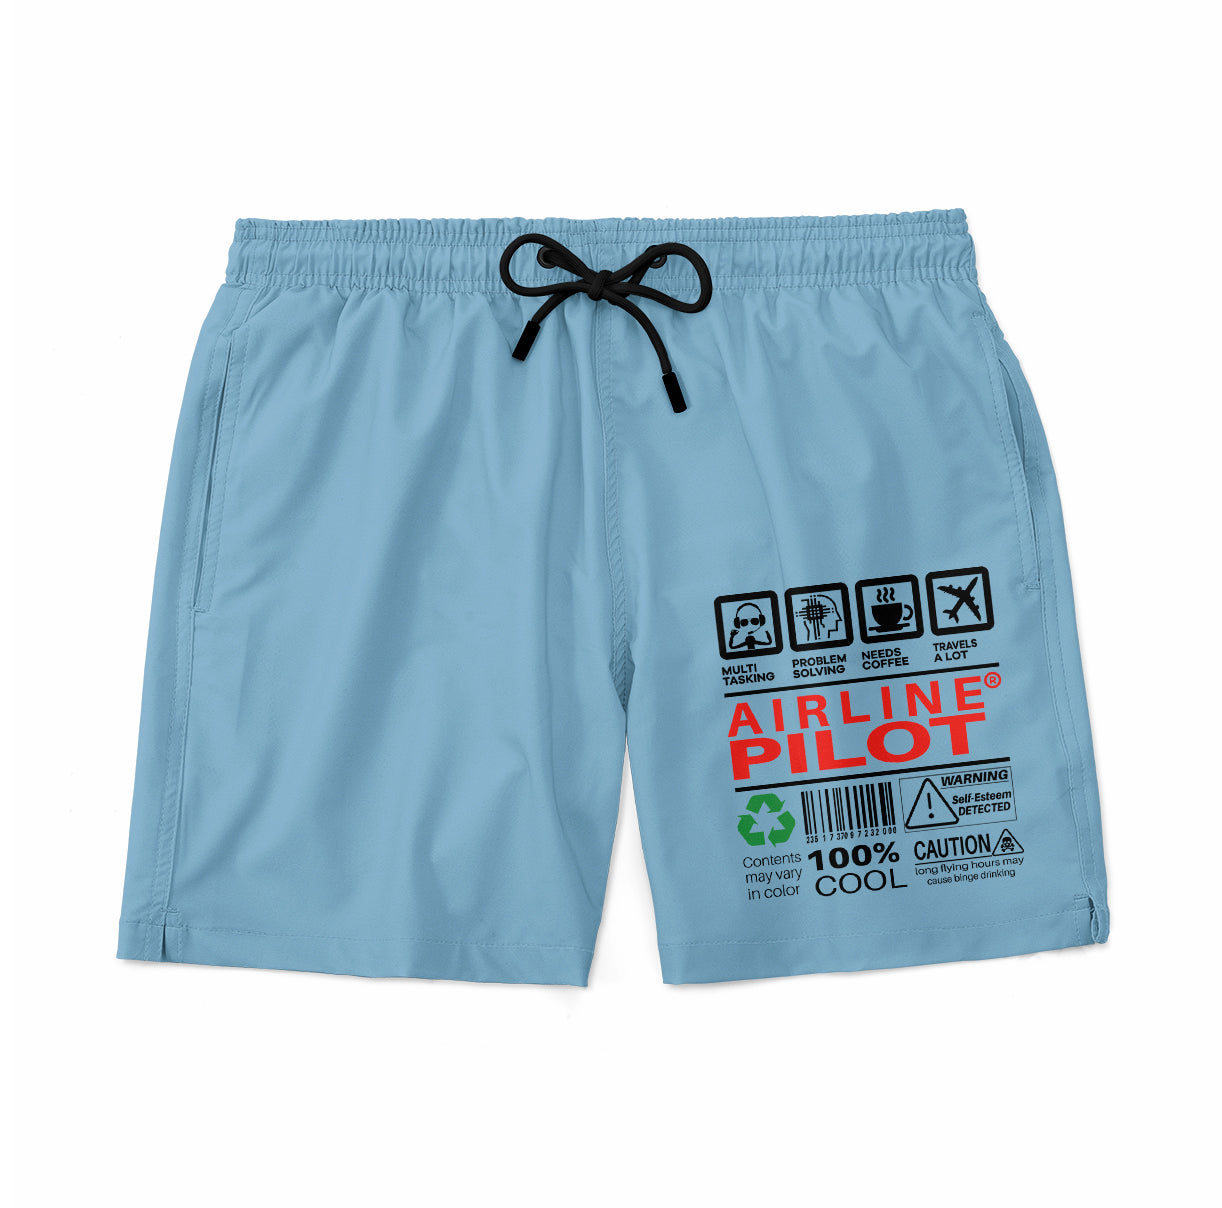 Airline Pilot Label Designed Swim Trunks & Shorts